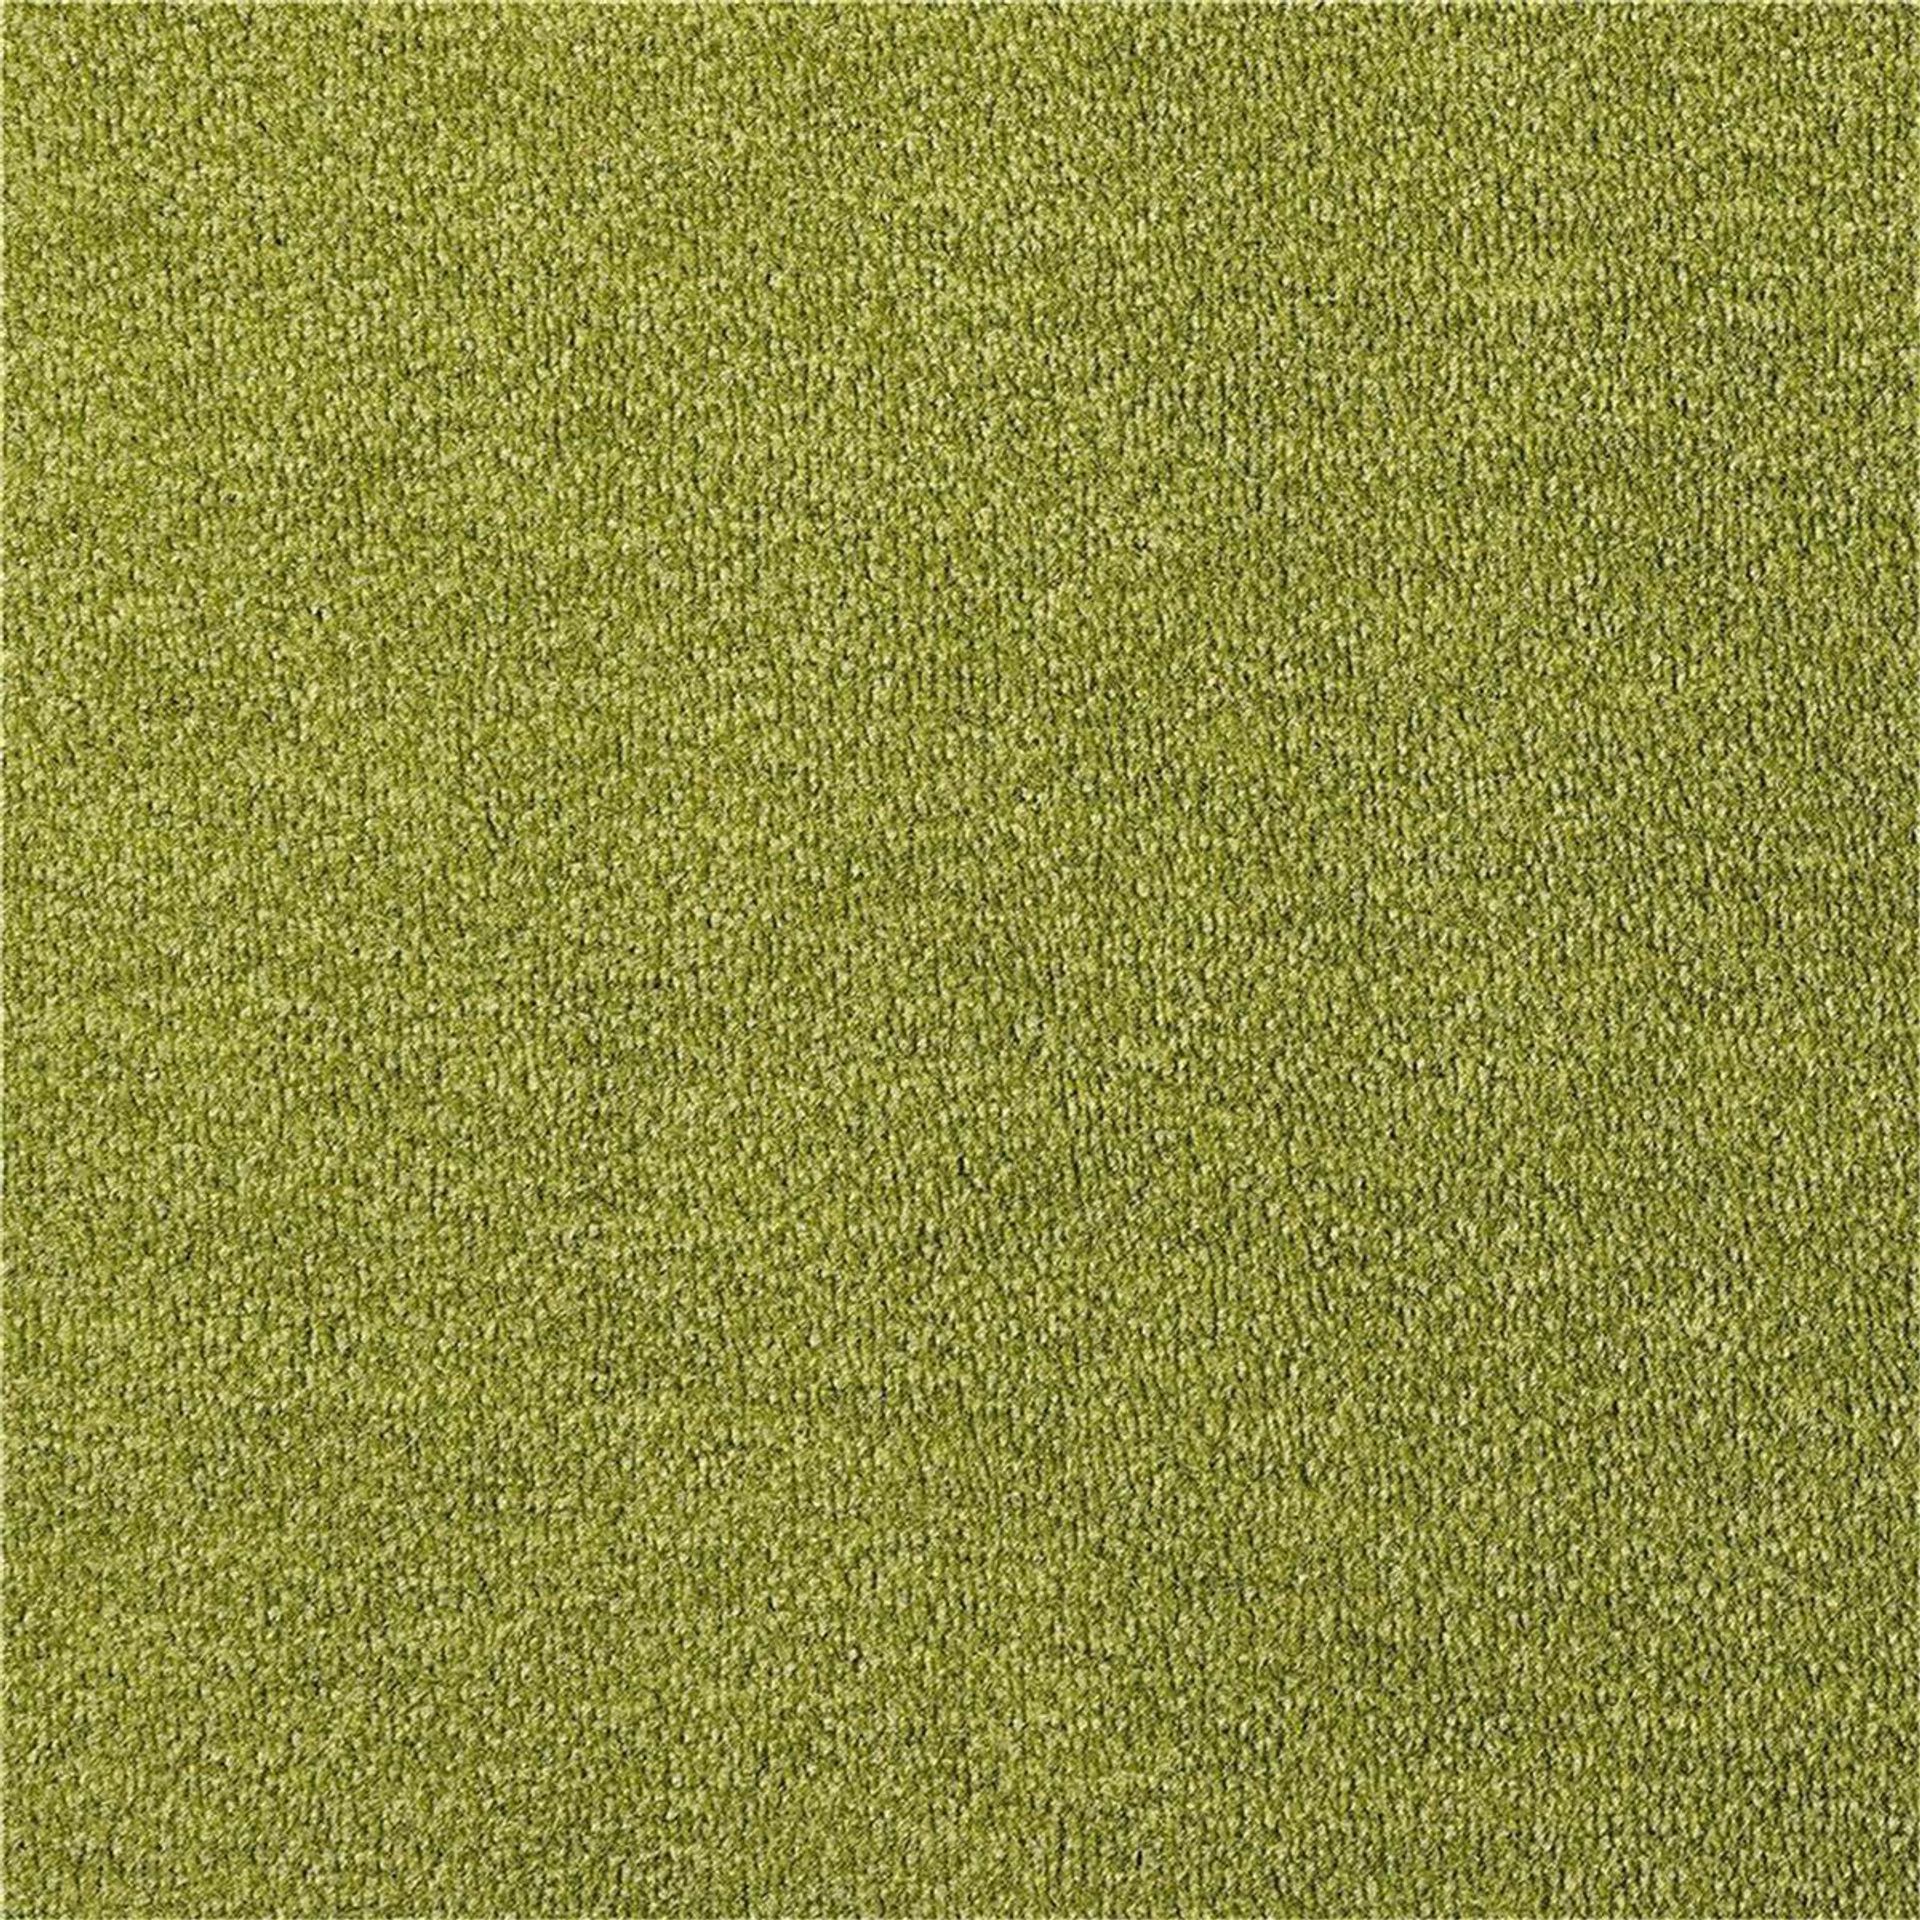 Teppichboden Infloor-Girloon Charme Velours Grün 440 meliert - Rollenbreite 400 cm